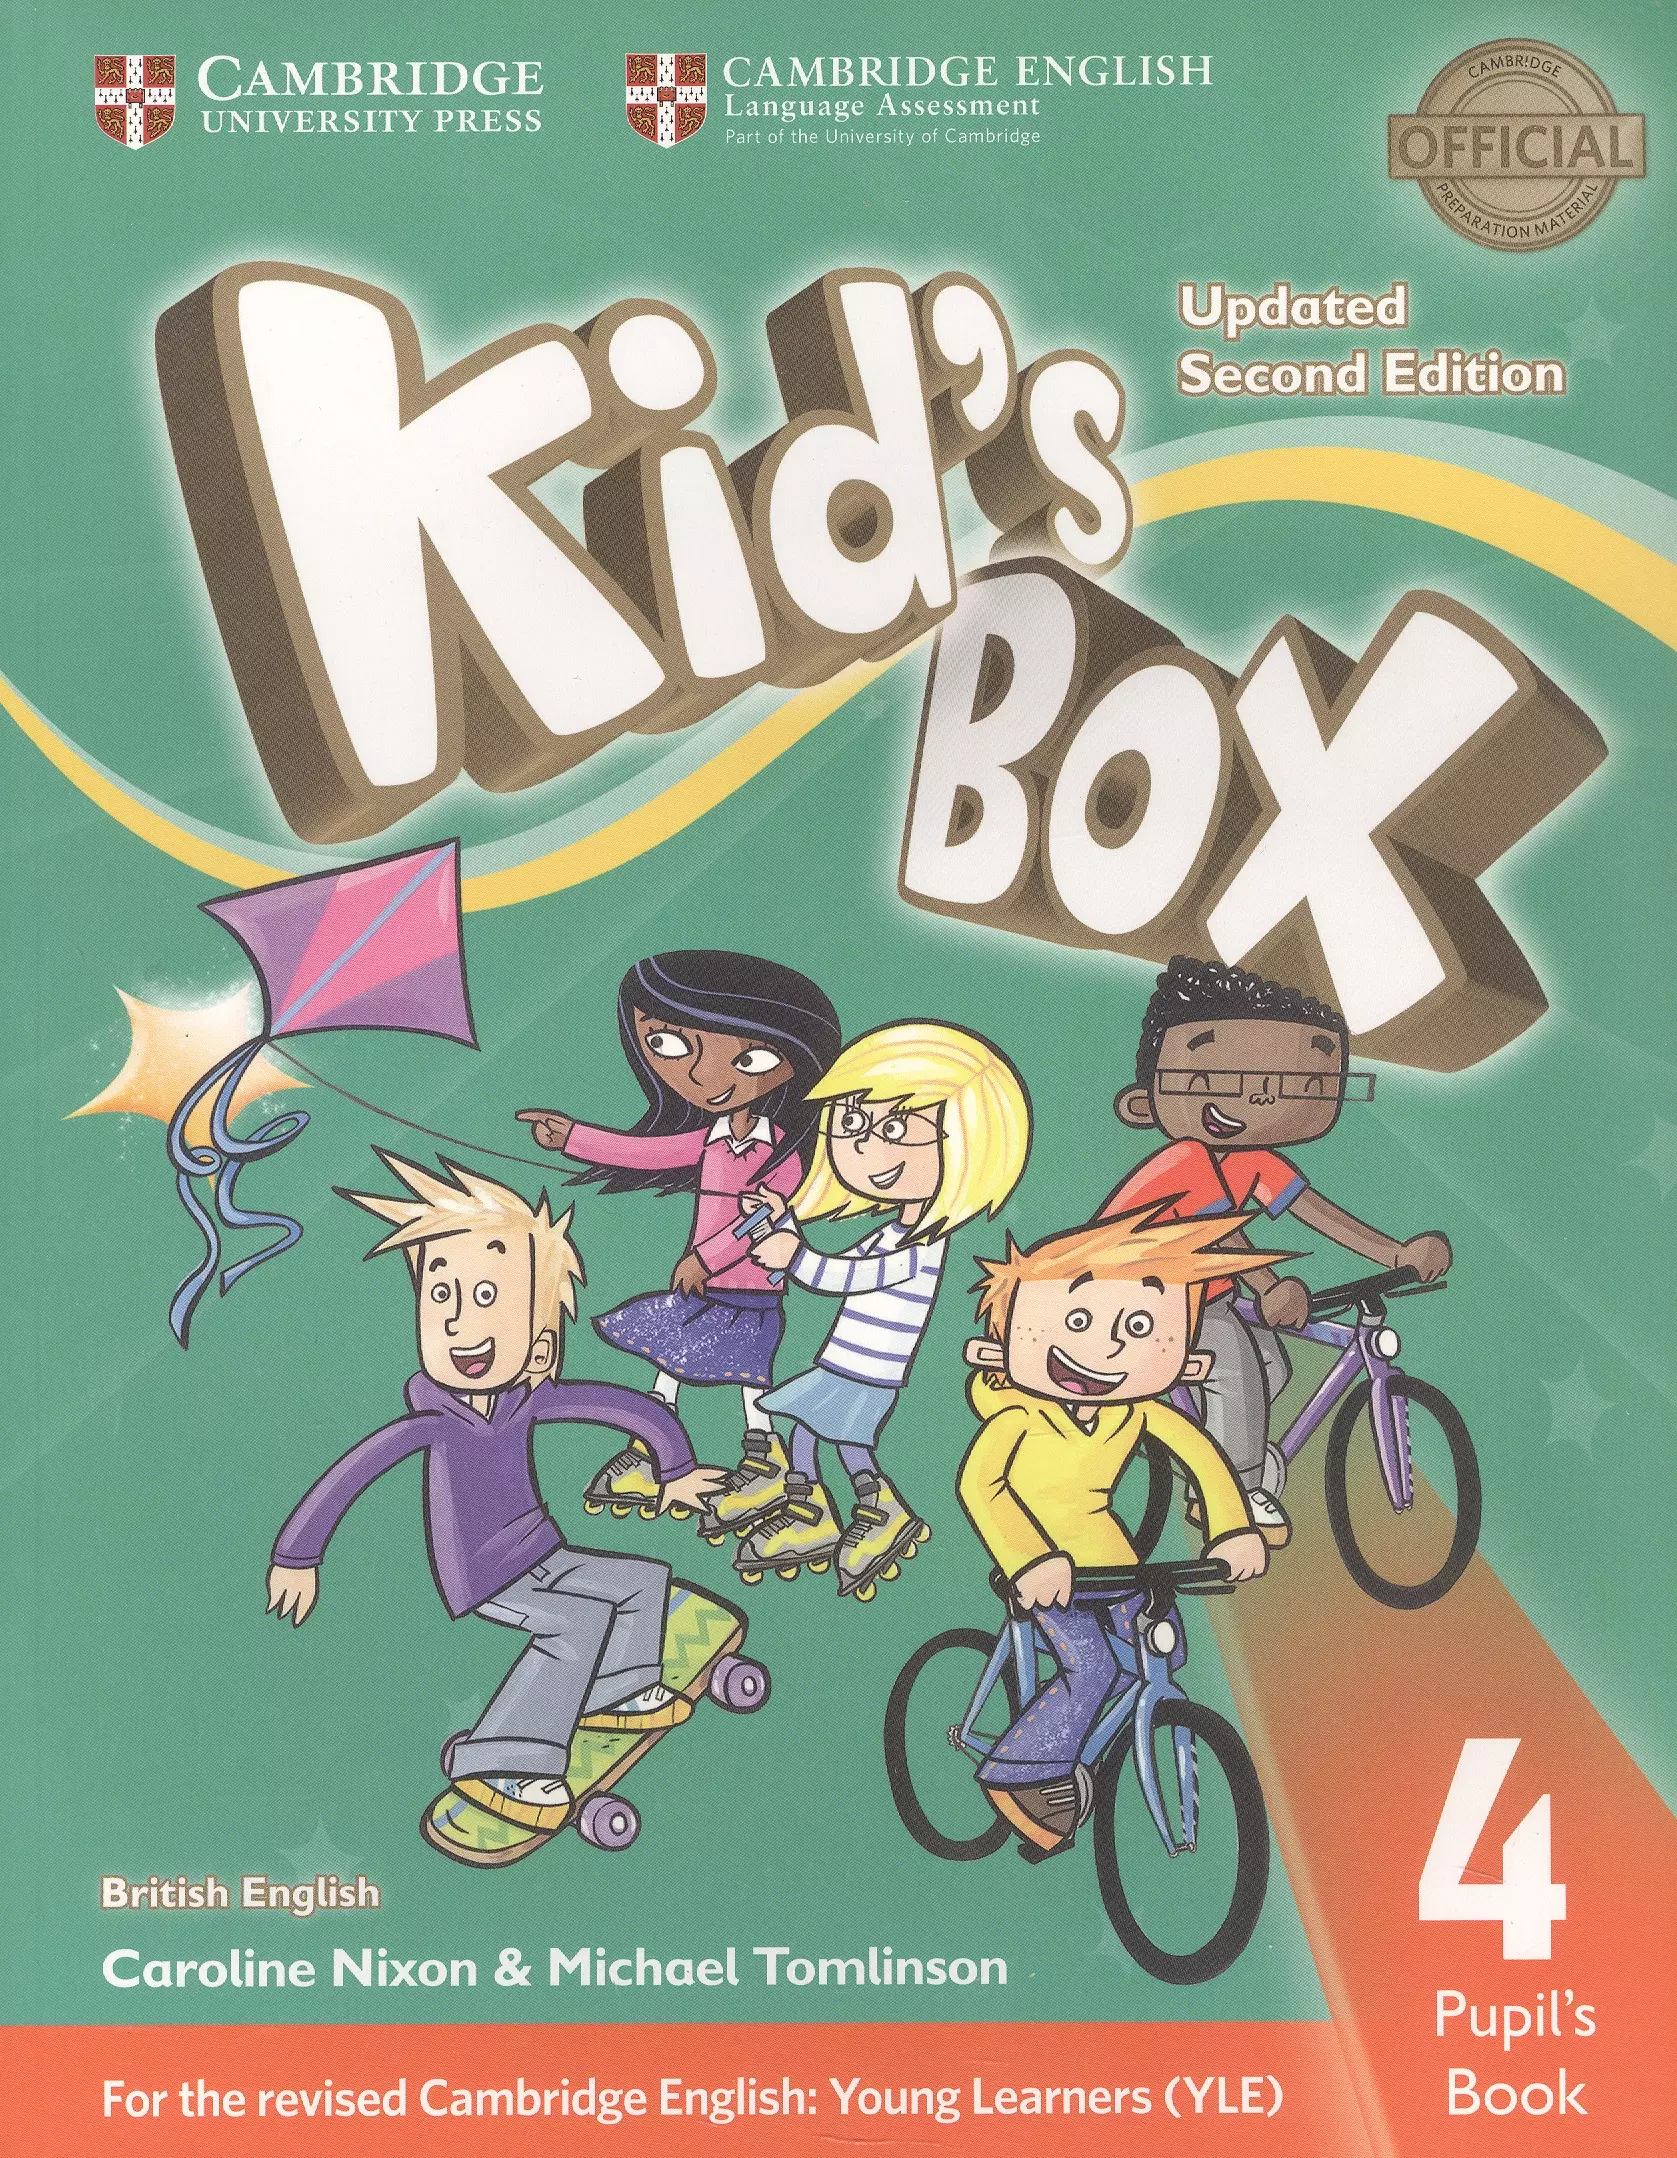 Tomlinson Michael, Nixon Caroline - Kids Box. British English. Pupils Book 4. Updated Second Edition